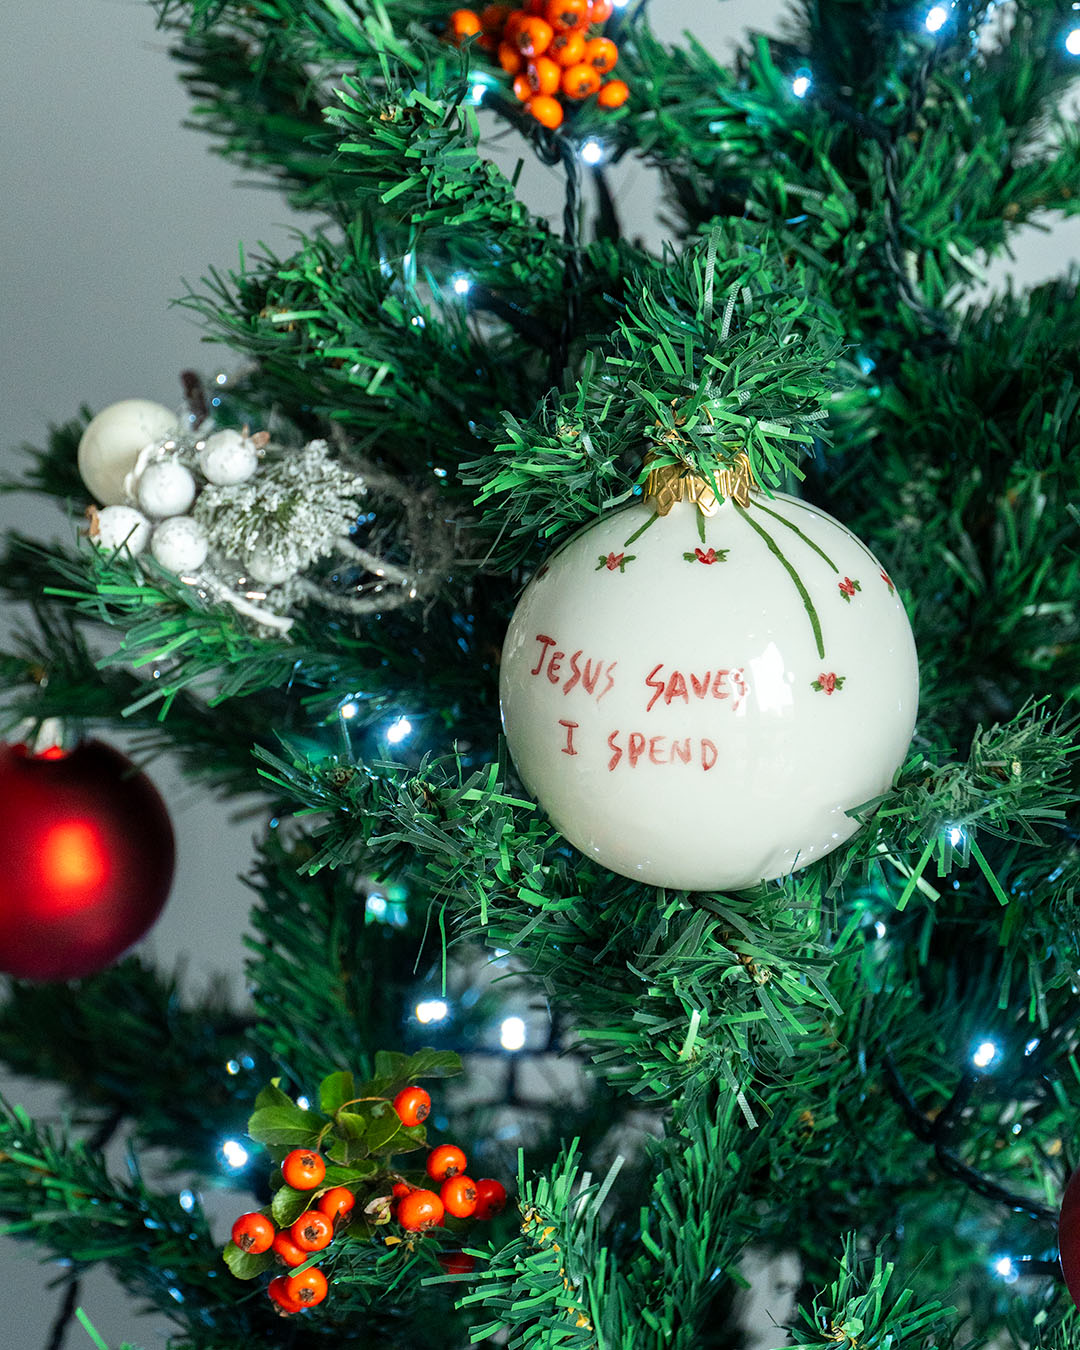 "Jesus Saves I Spend" Christmas ball